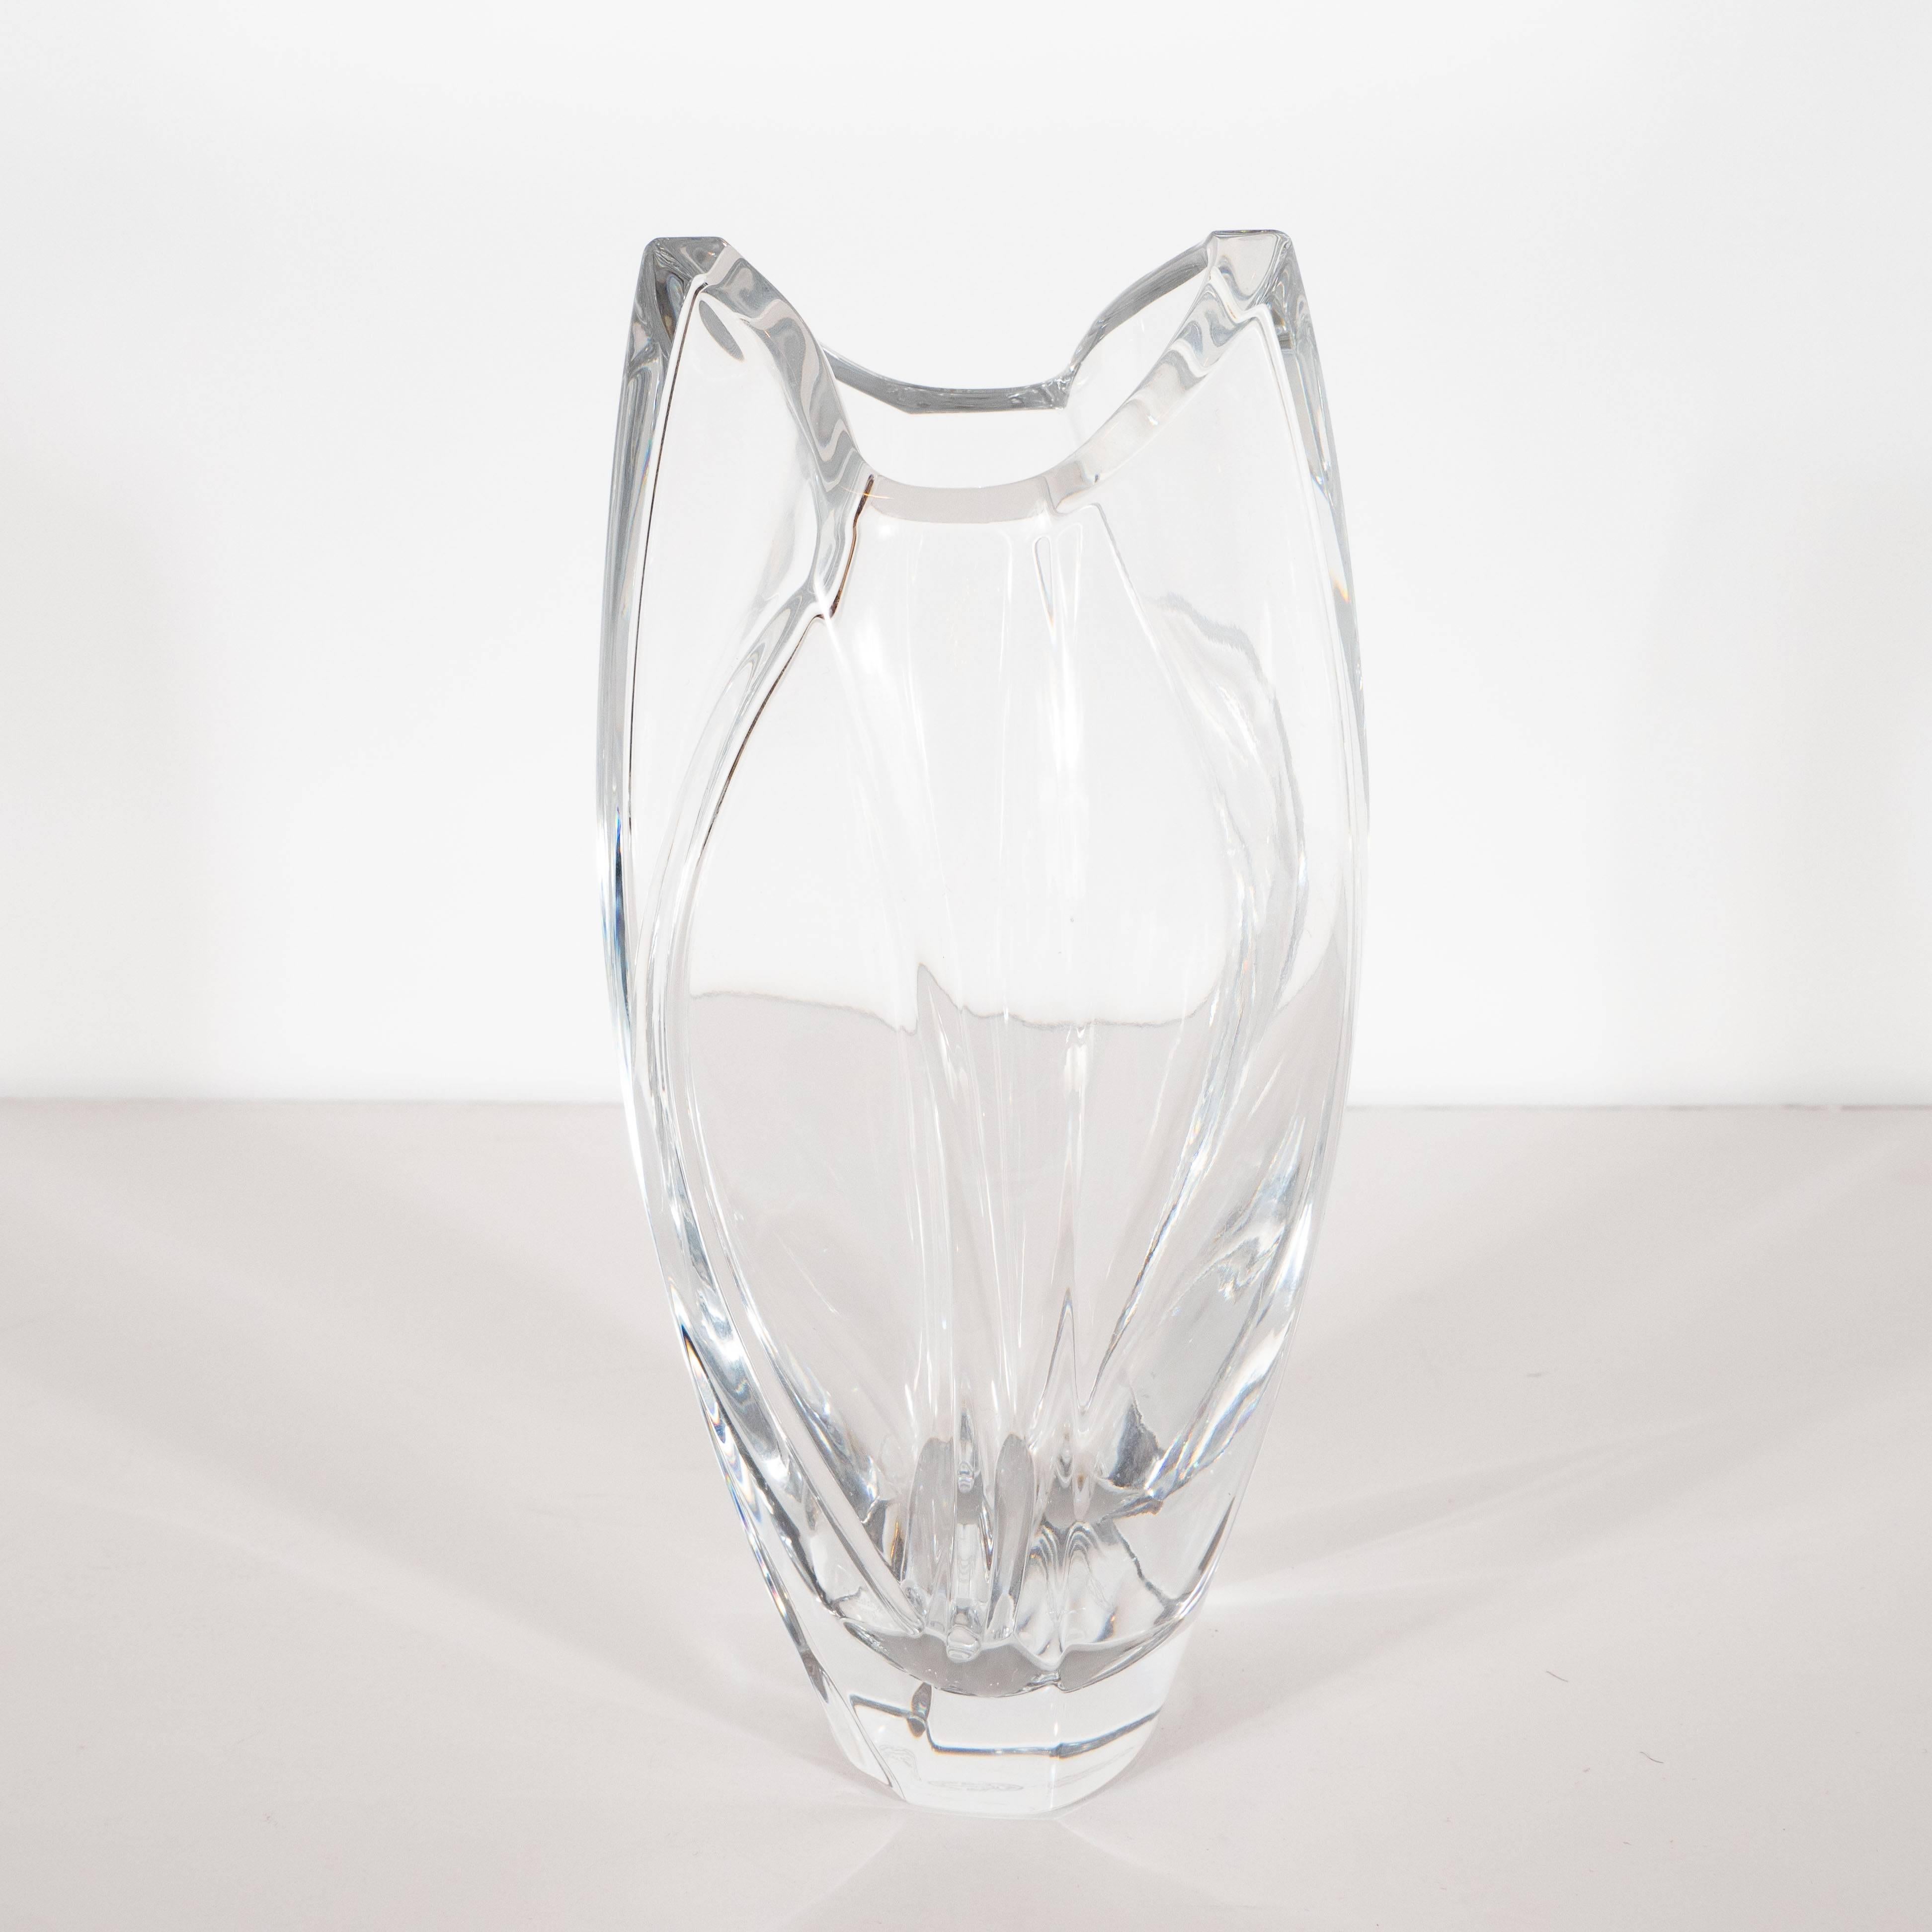 French Modernist Sculptural Translucent Crystal Vase by Robert Rigot for Baccarat